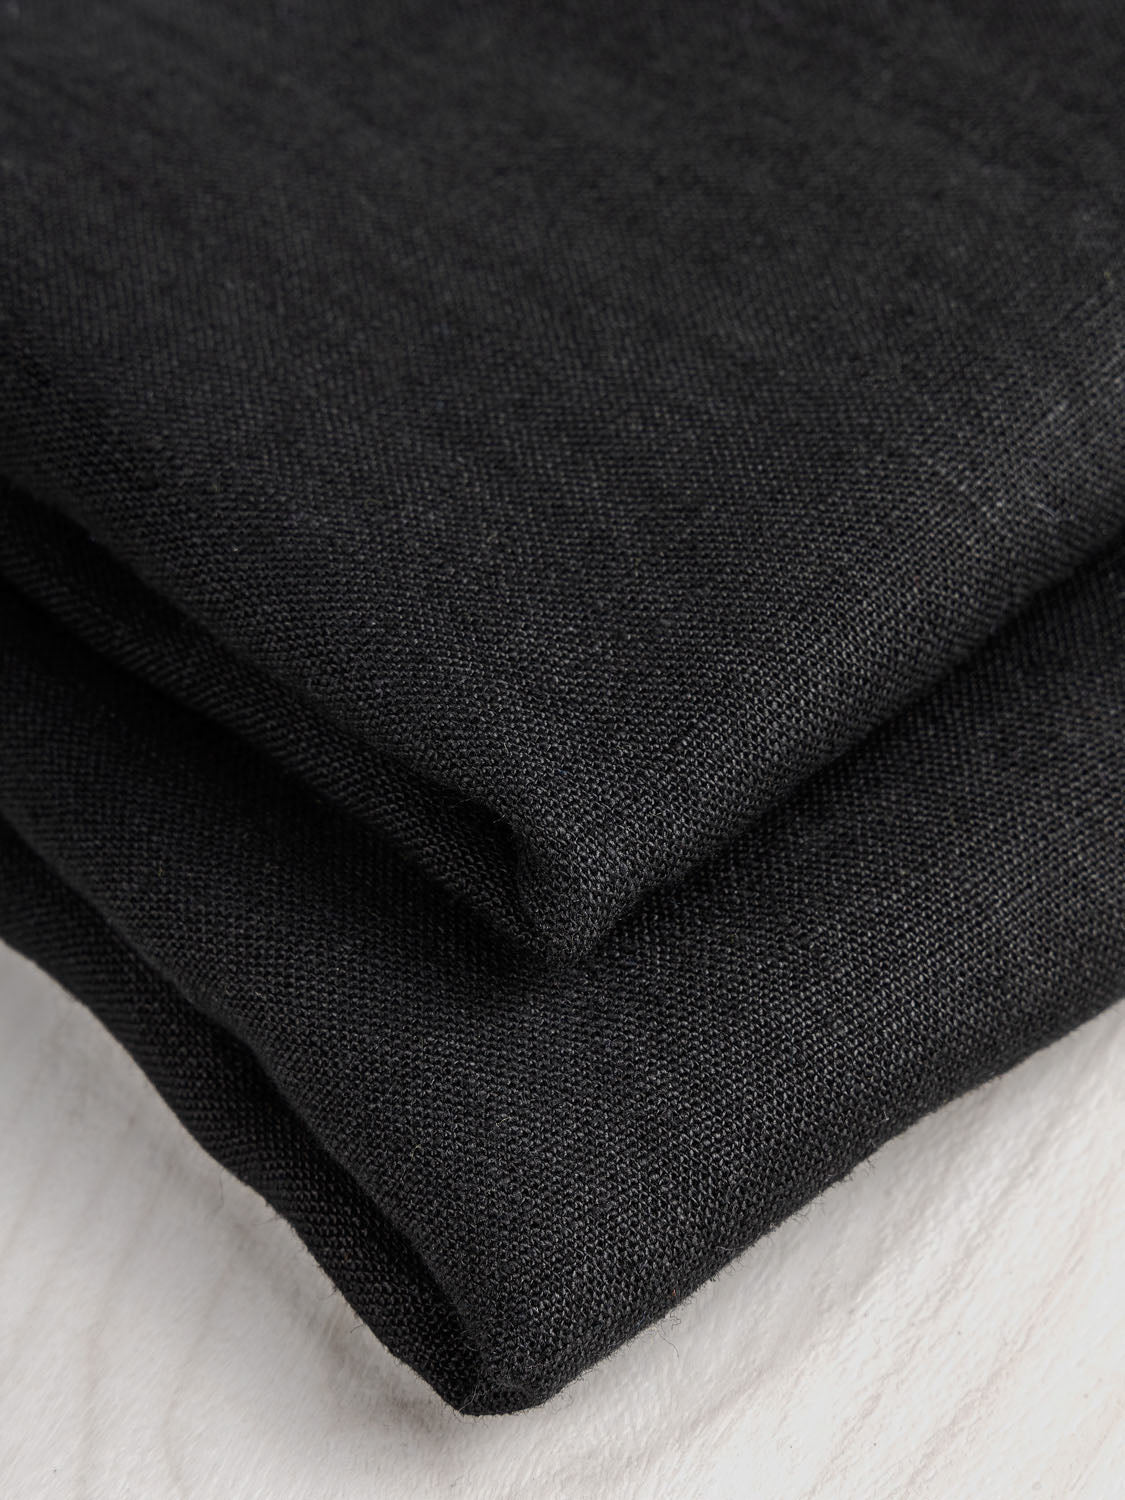 Buy Pure Premium Linen Fabrics Online